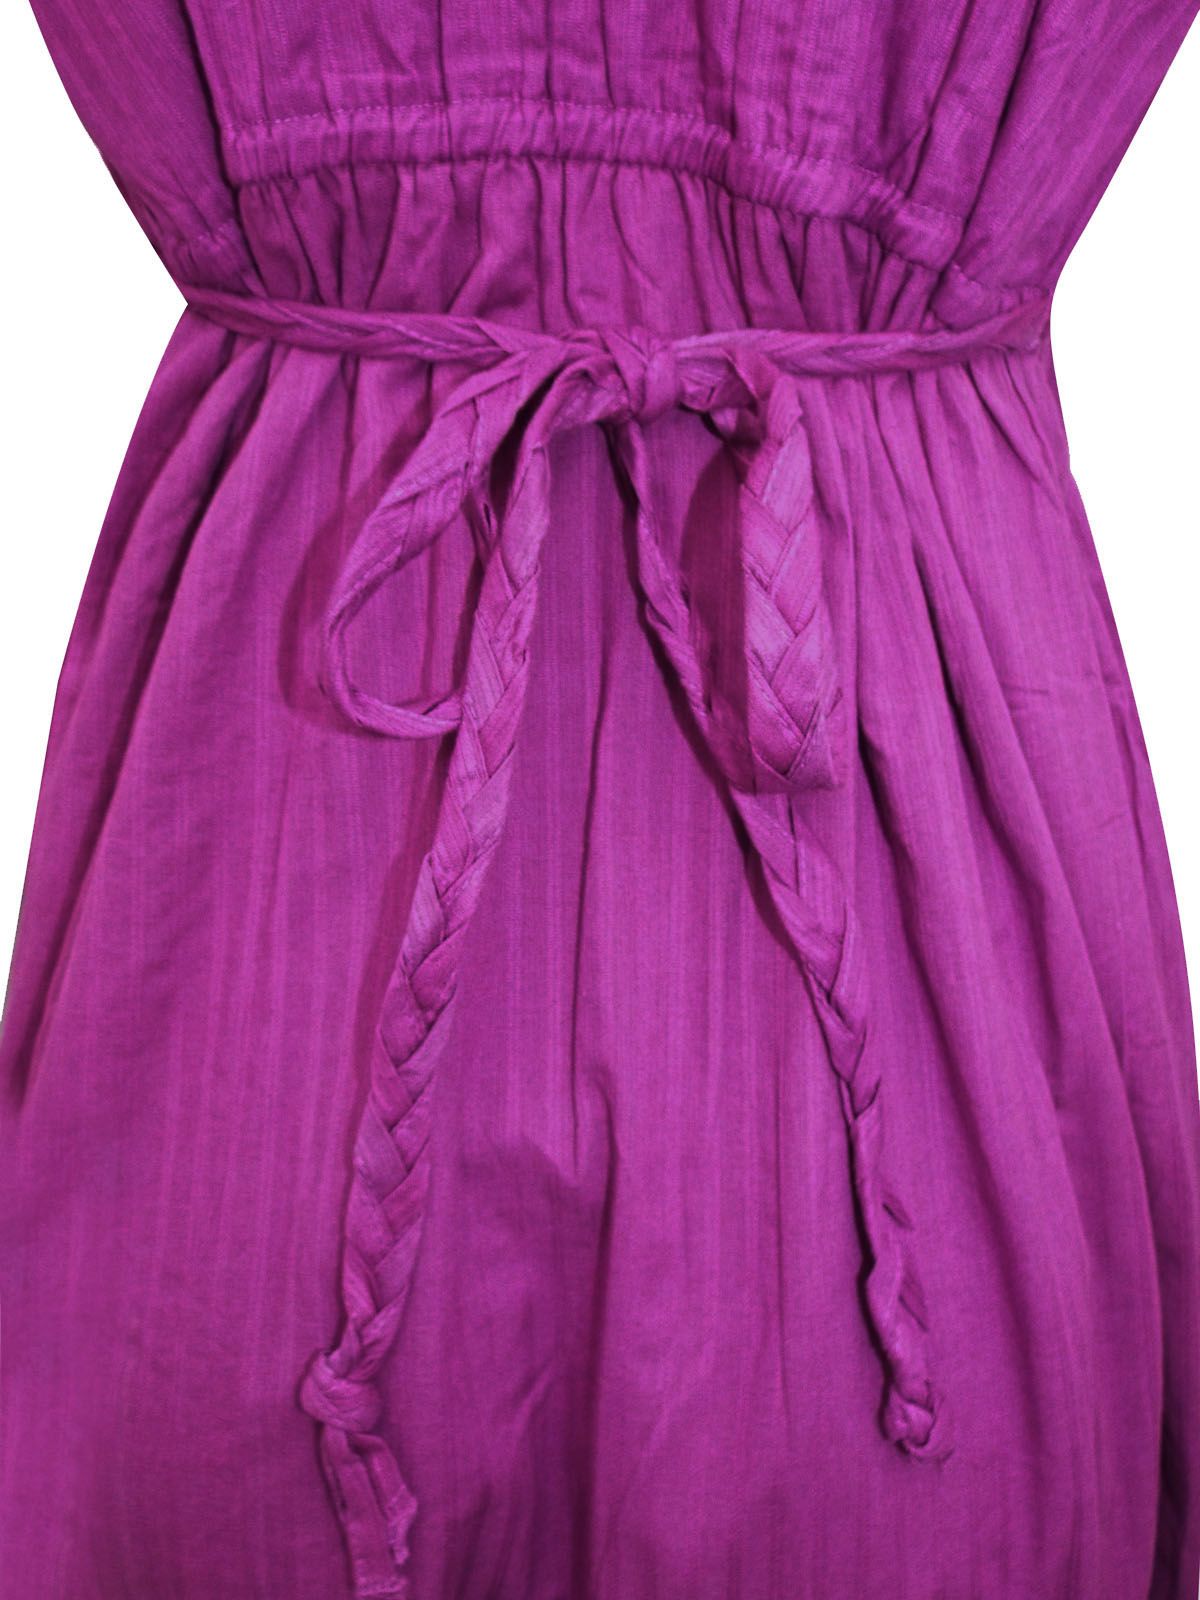 PURPLE Pure Cotton Gypsy Dress - Size 14 to 18